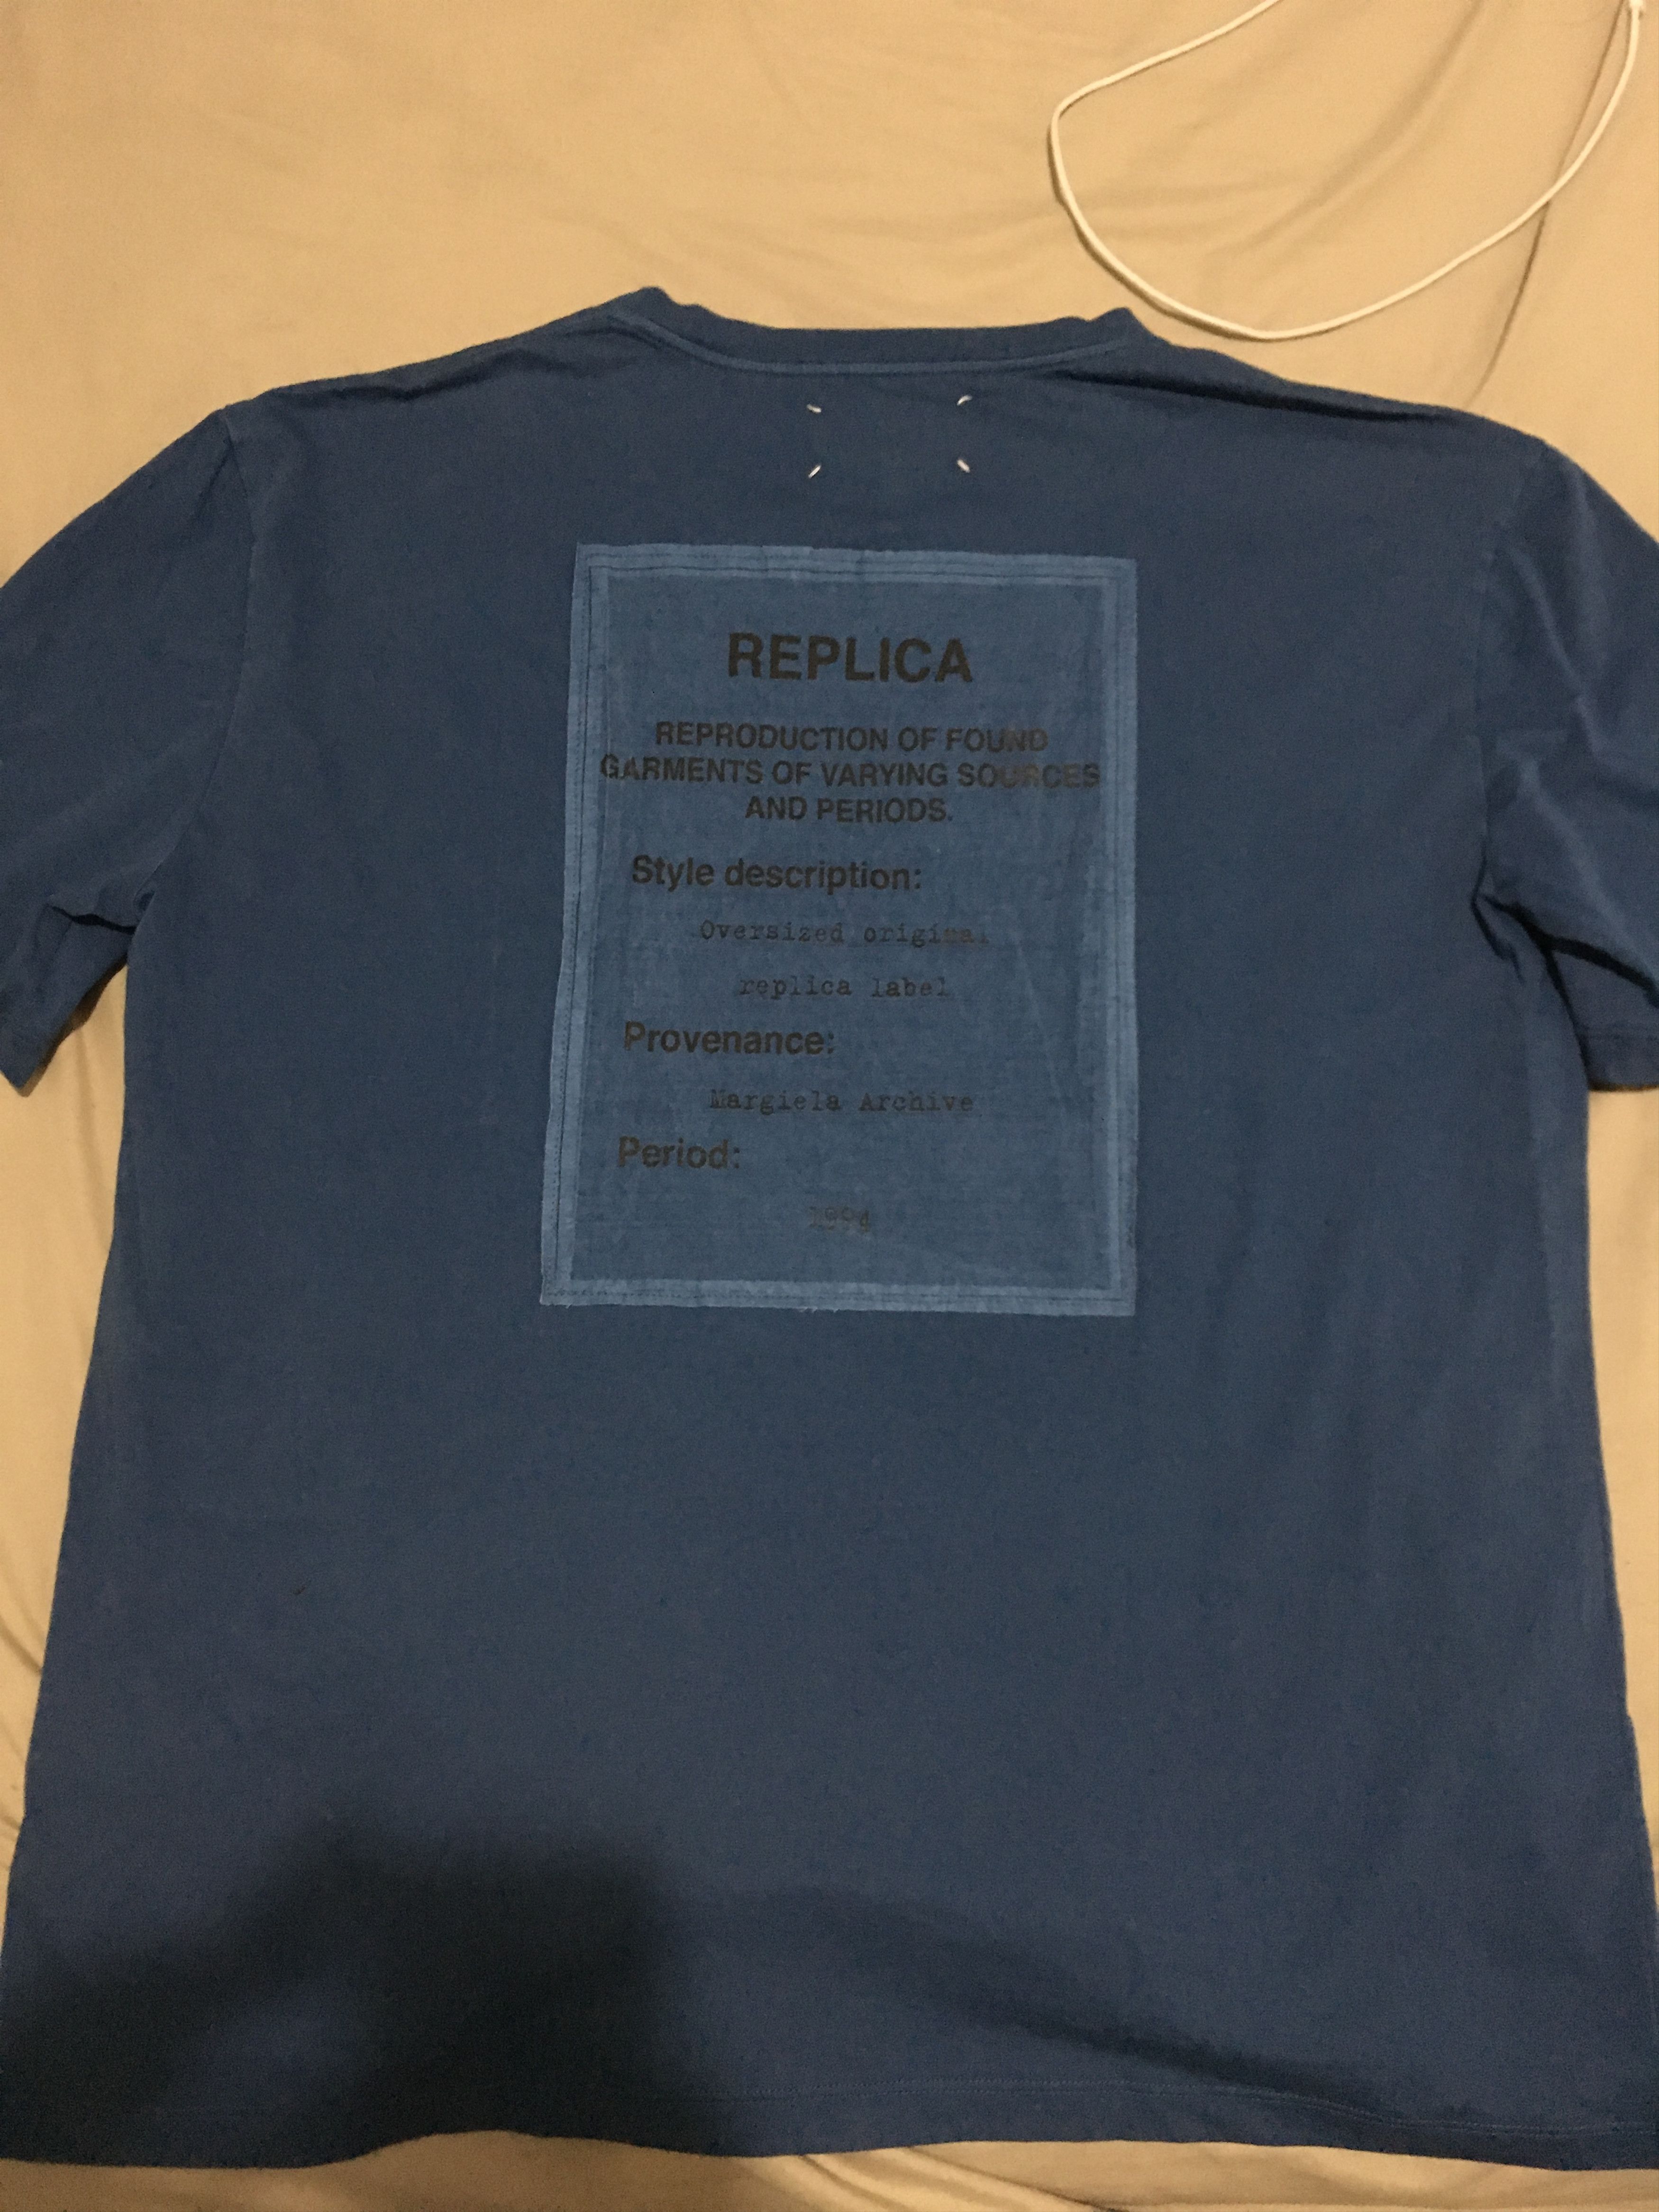 Maison Margiela Maison Margiela Replica Patch T-Shirt | Grailed